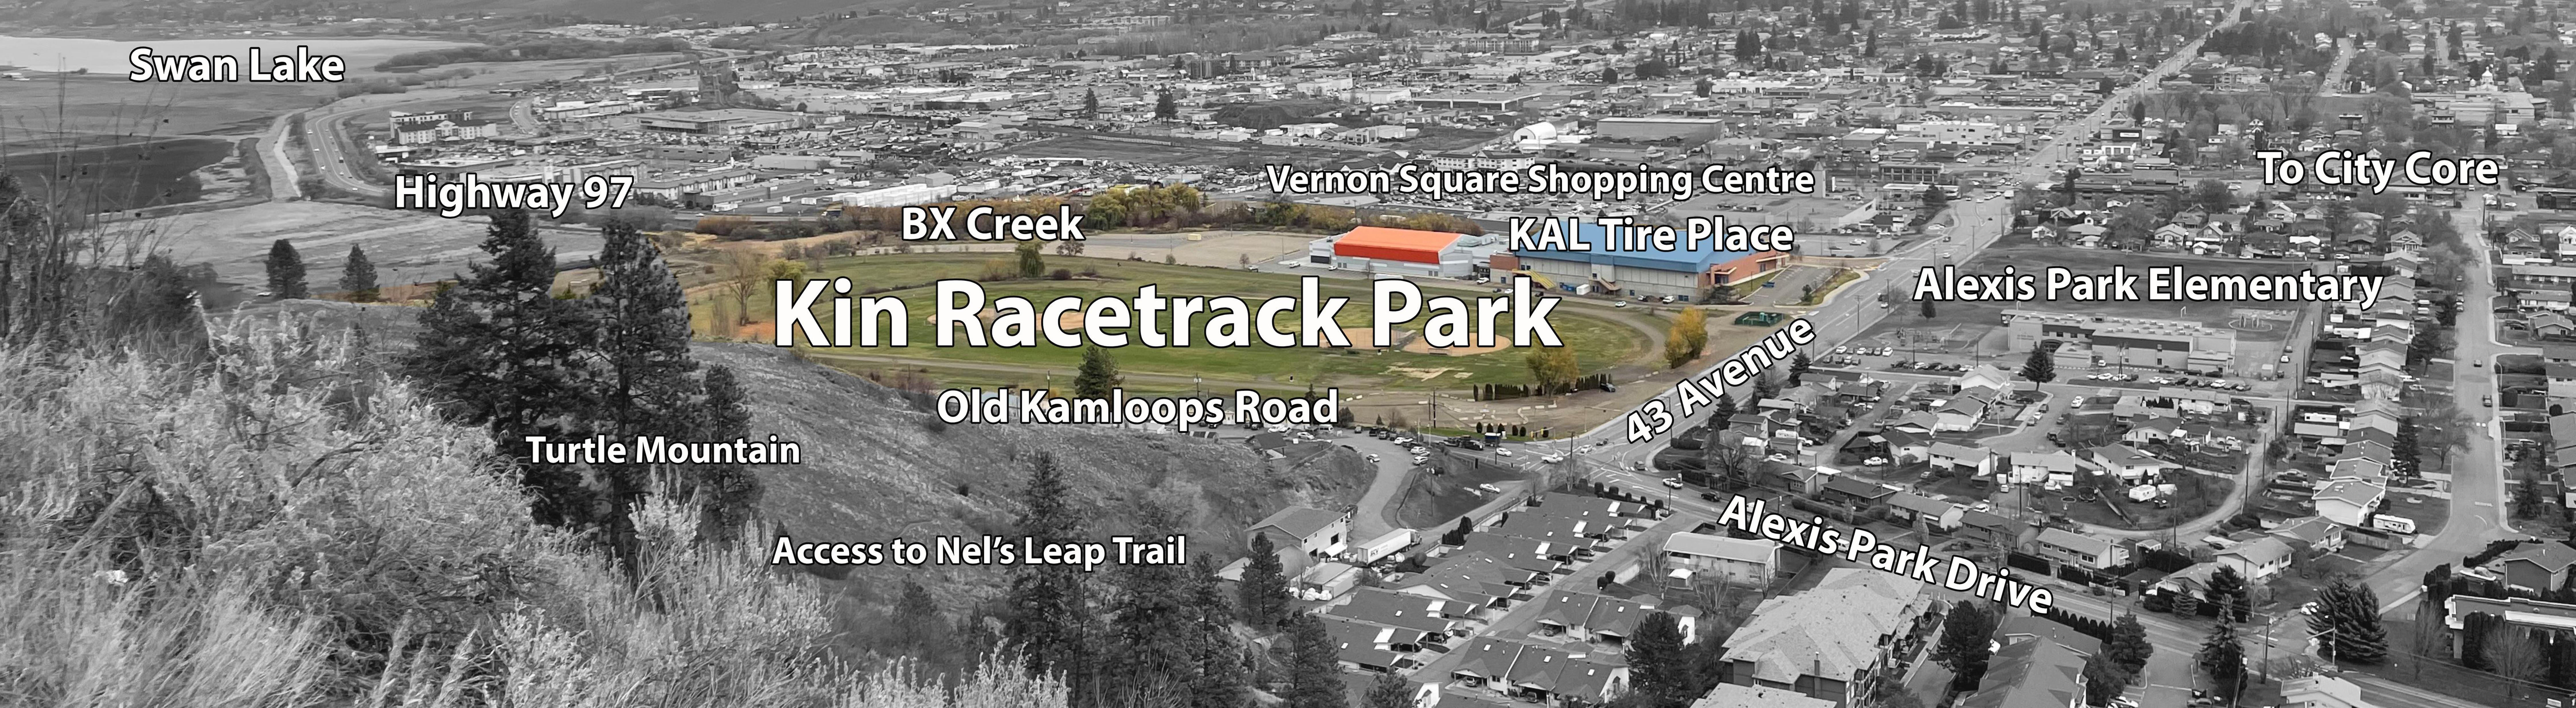 Kin Race Track Park Planning